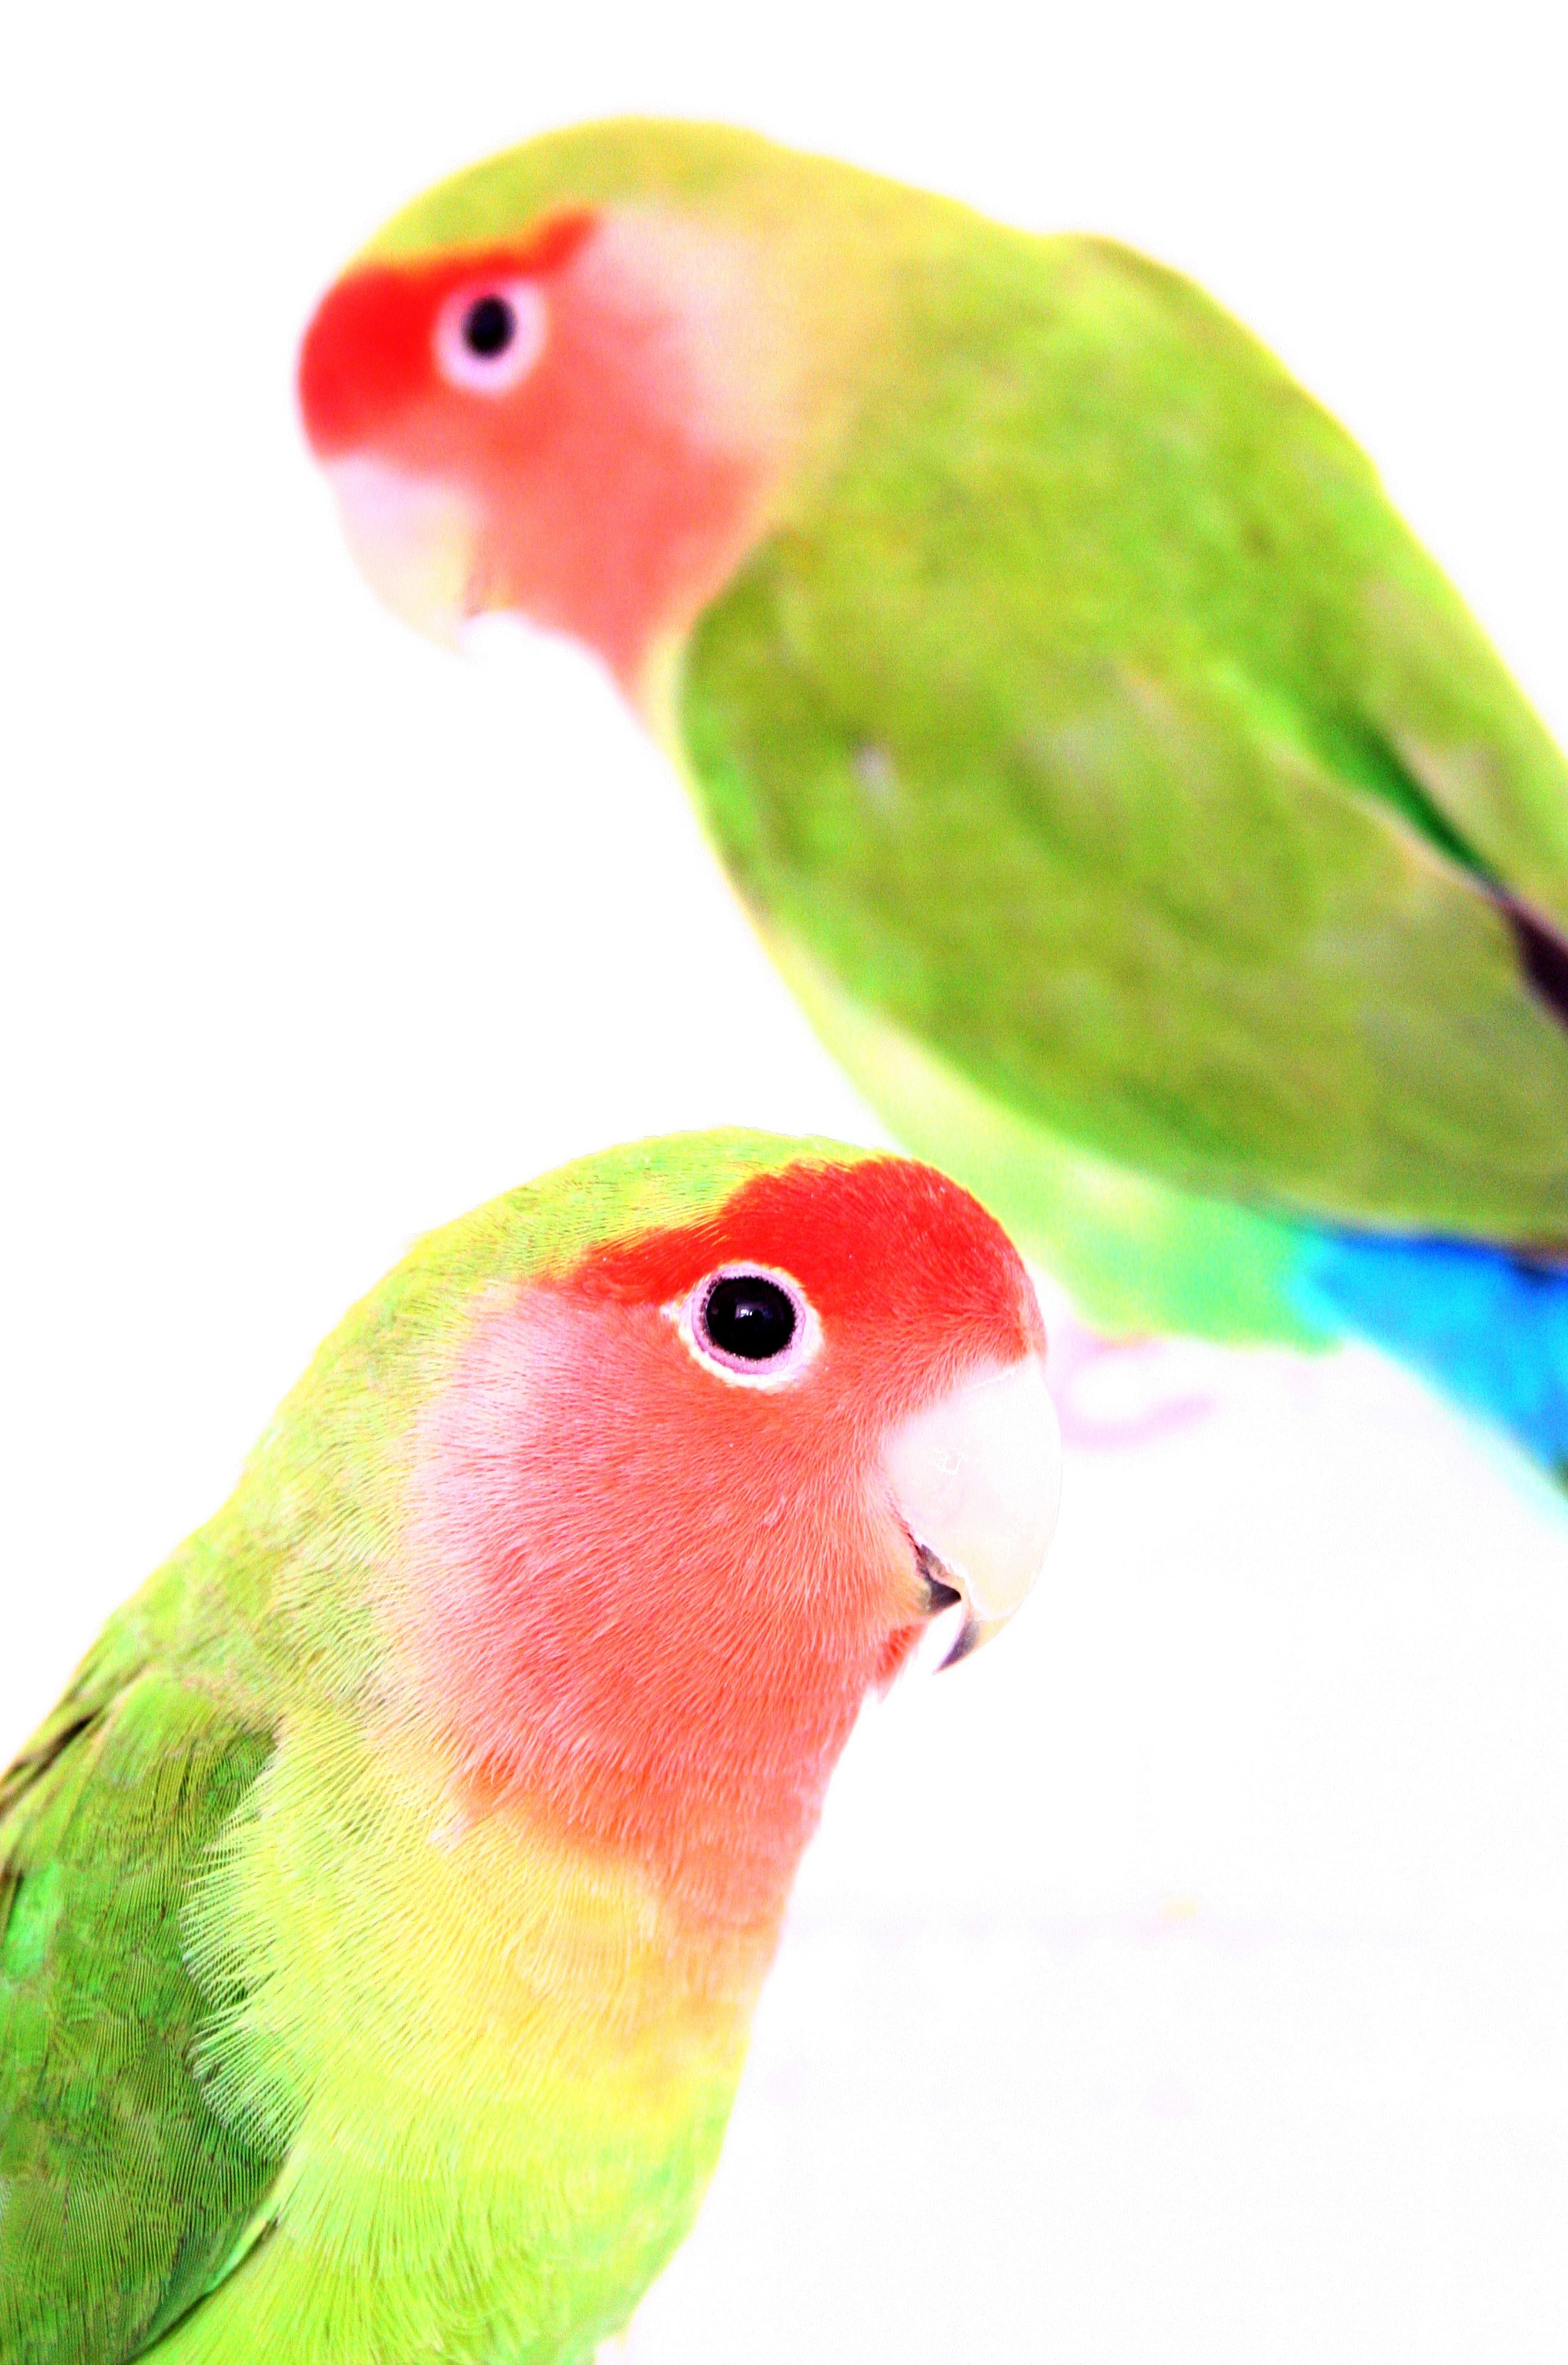 green and red short beak bird